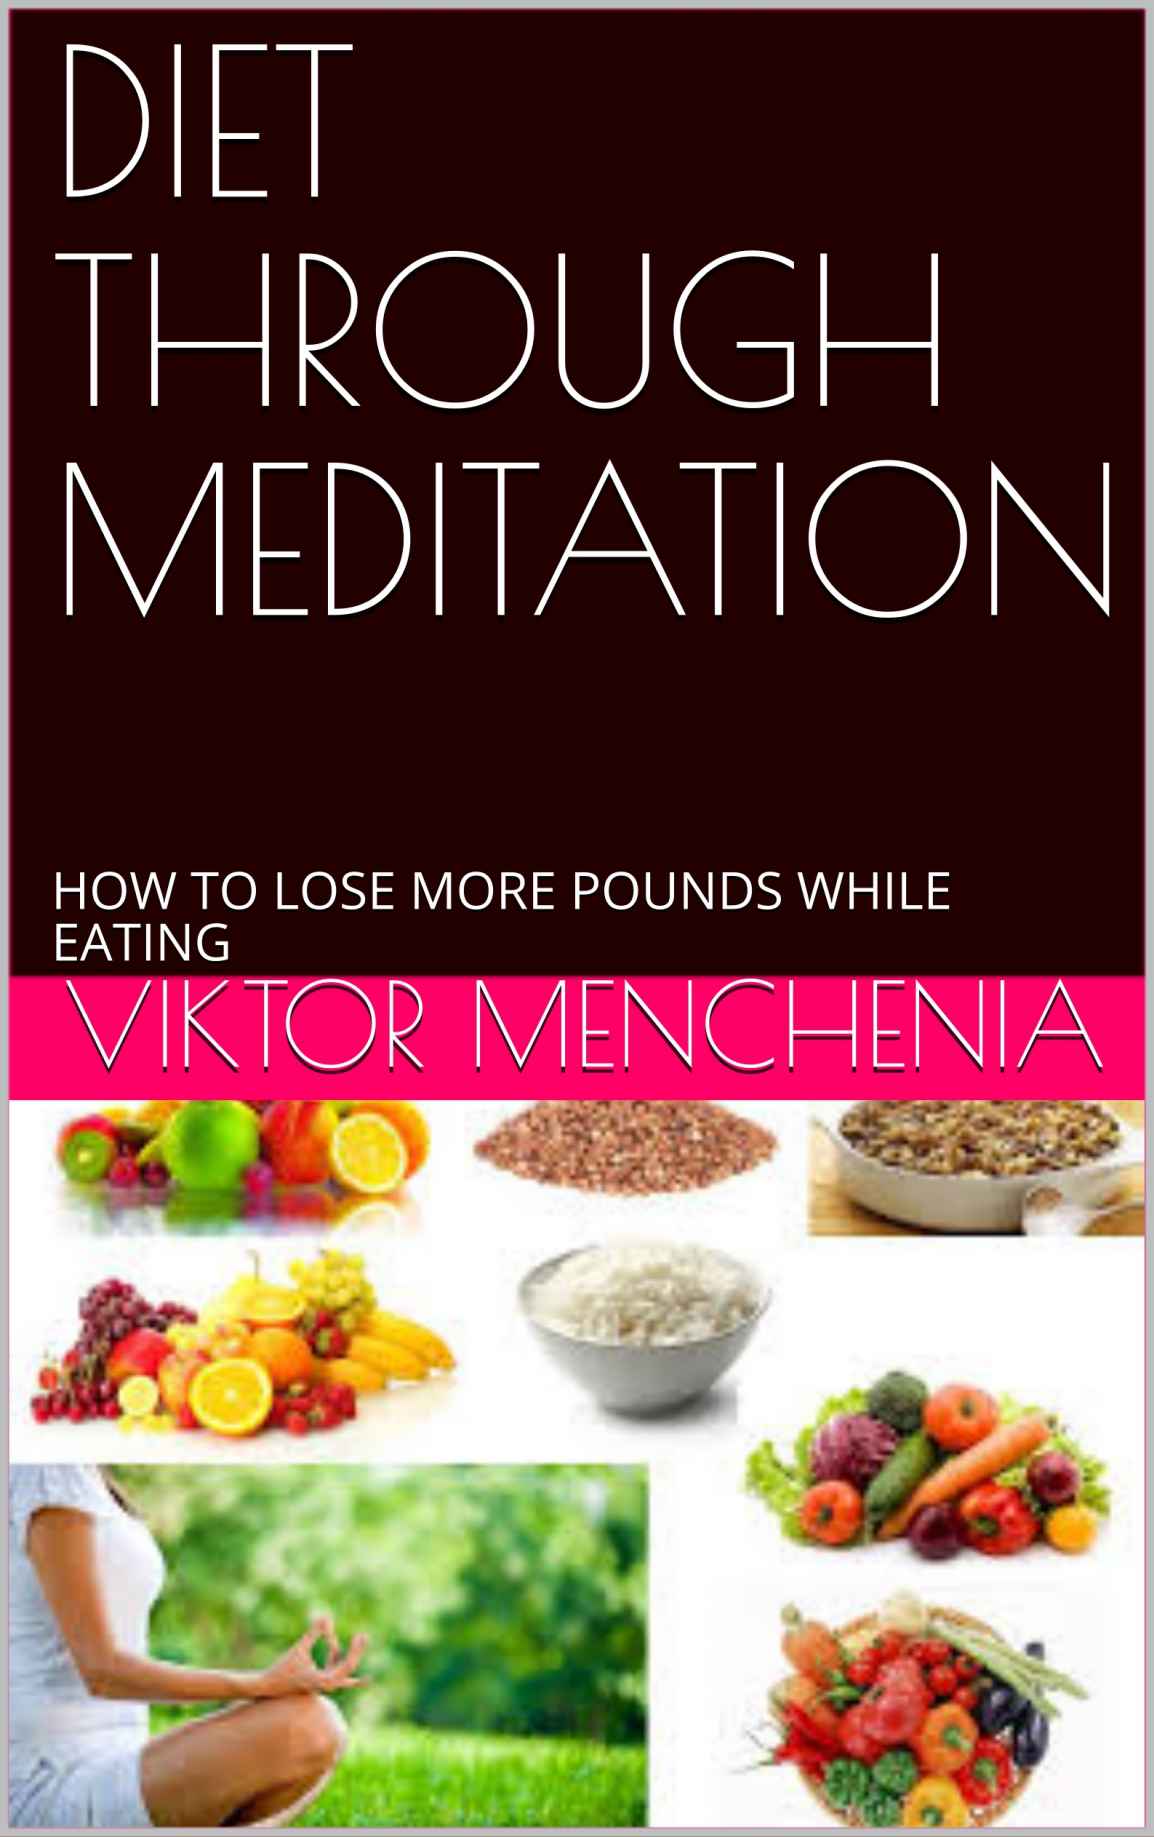 FREE: DIET THROUGH MEDITATION by Viktor Menchenia